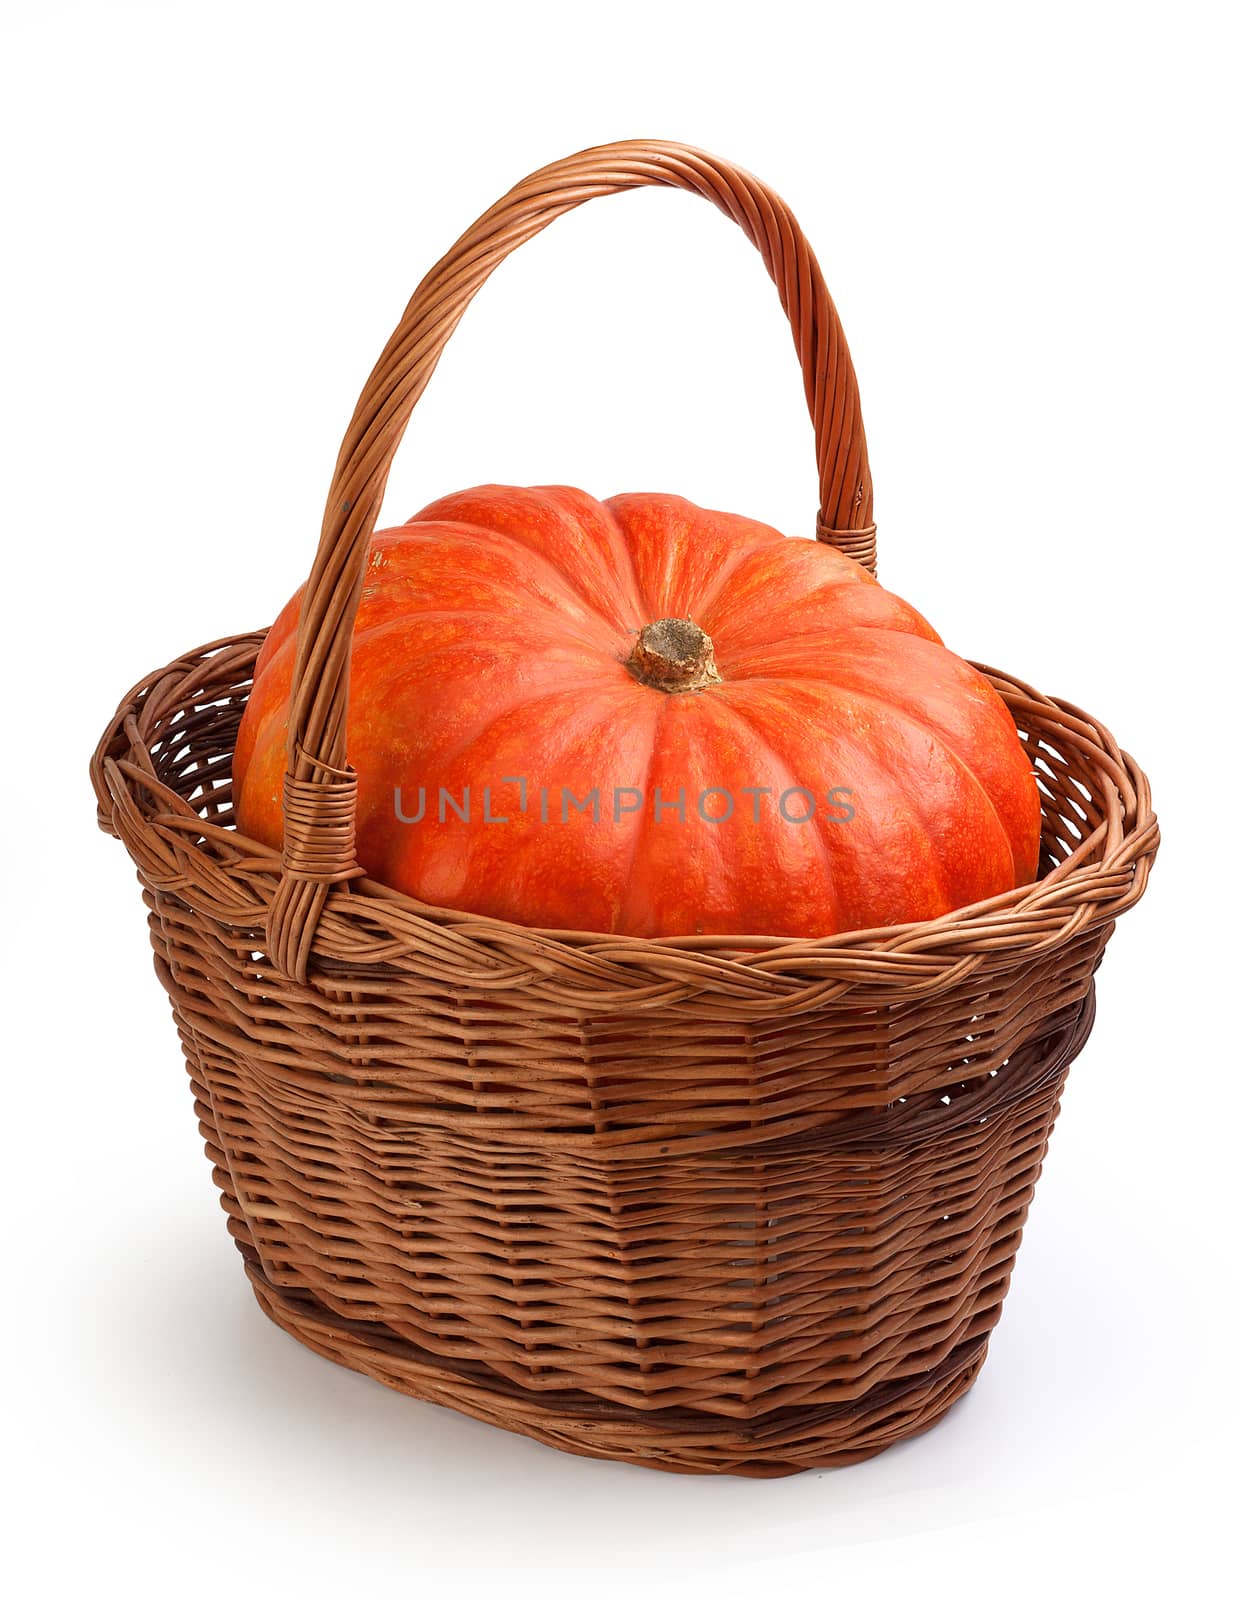 Pumpkin in the basket by Angorius